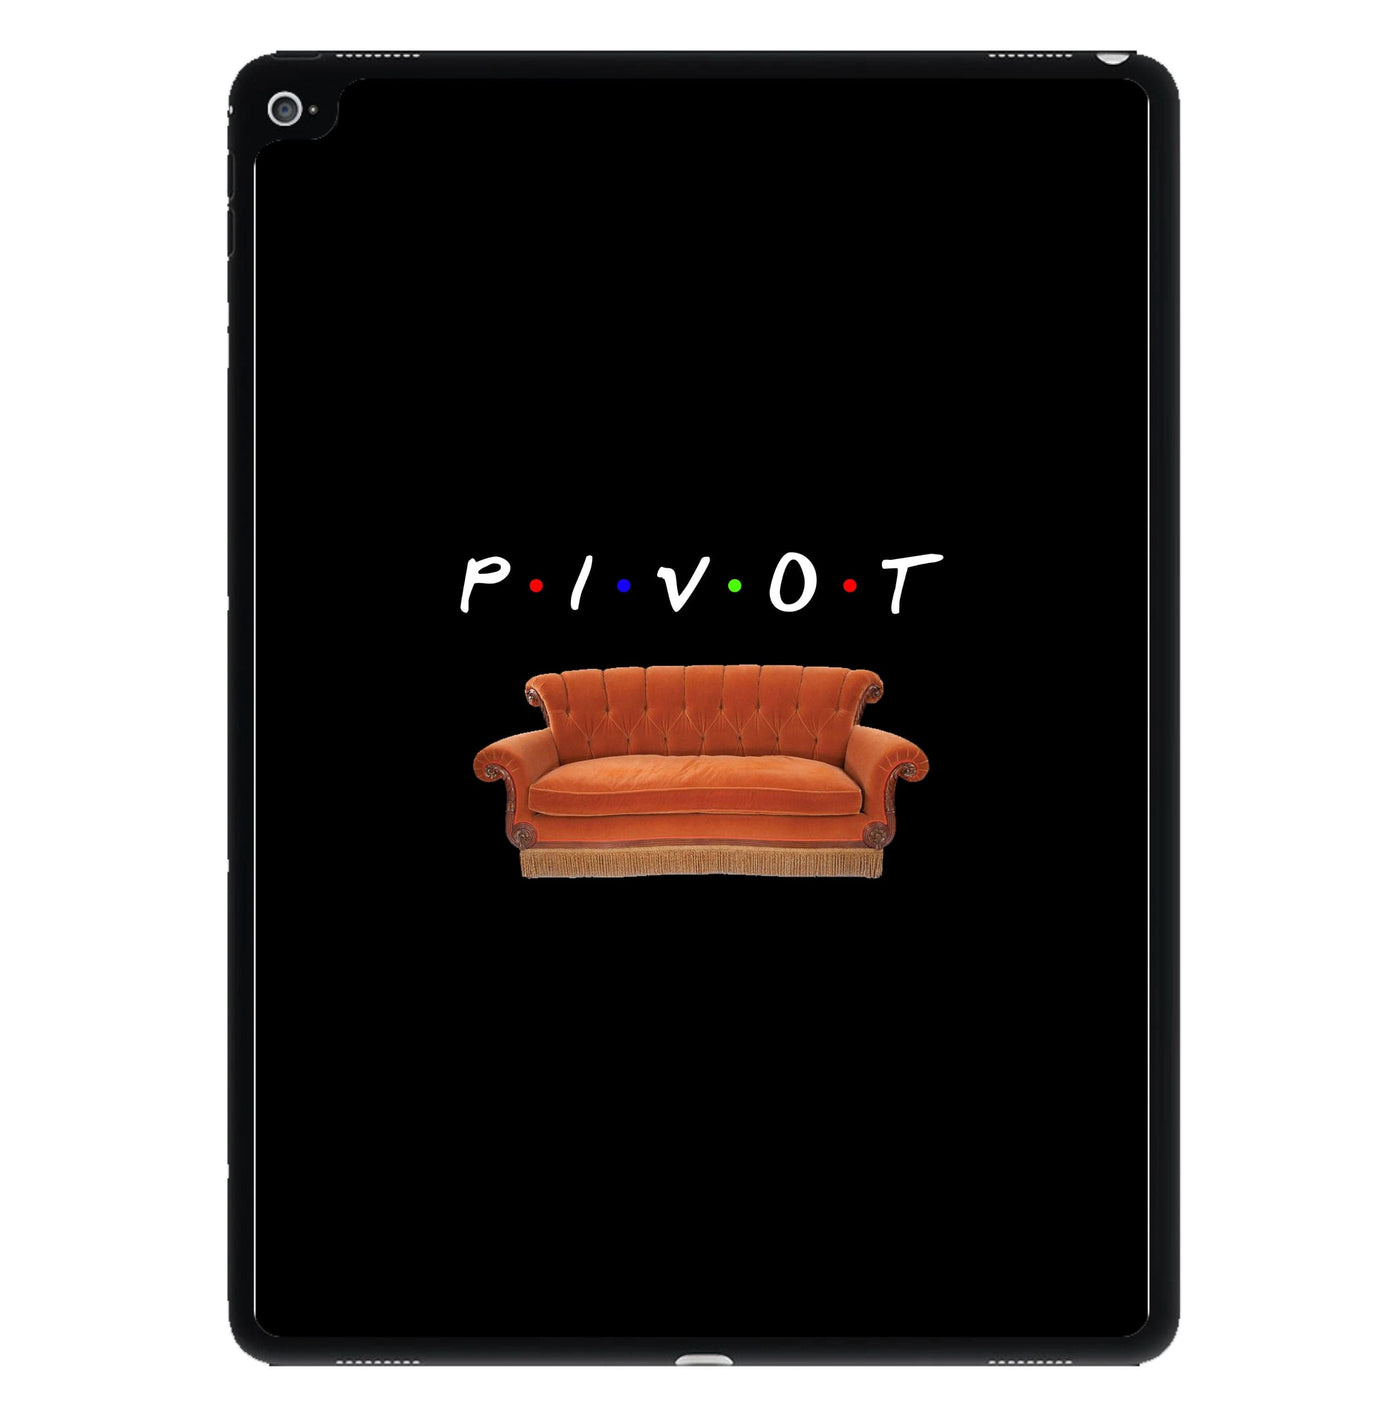 Pivot - Friends iPad Case